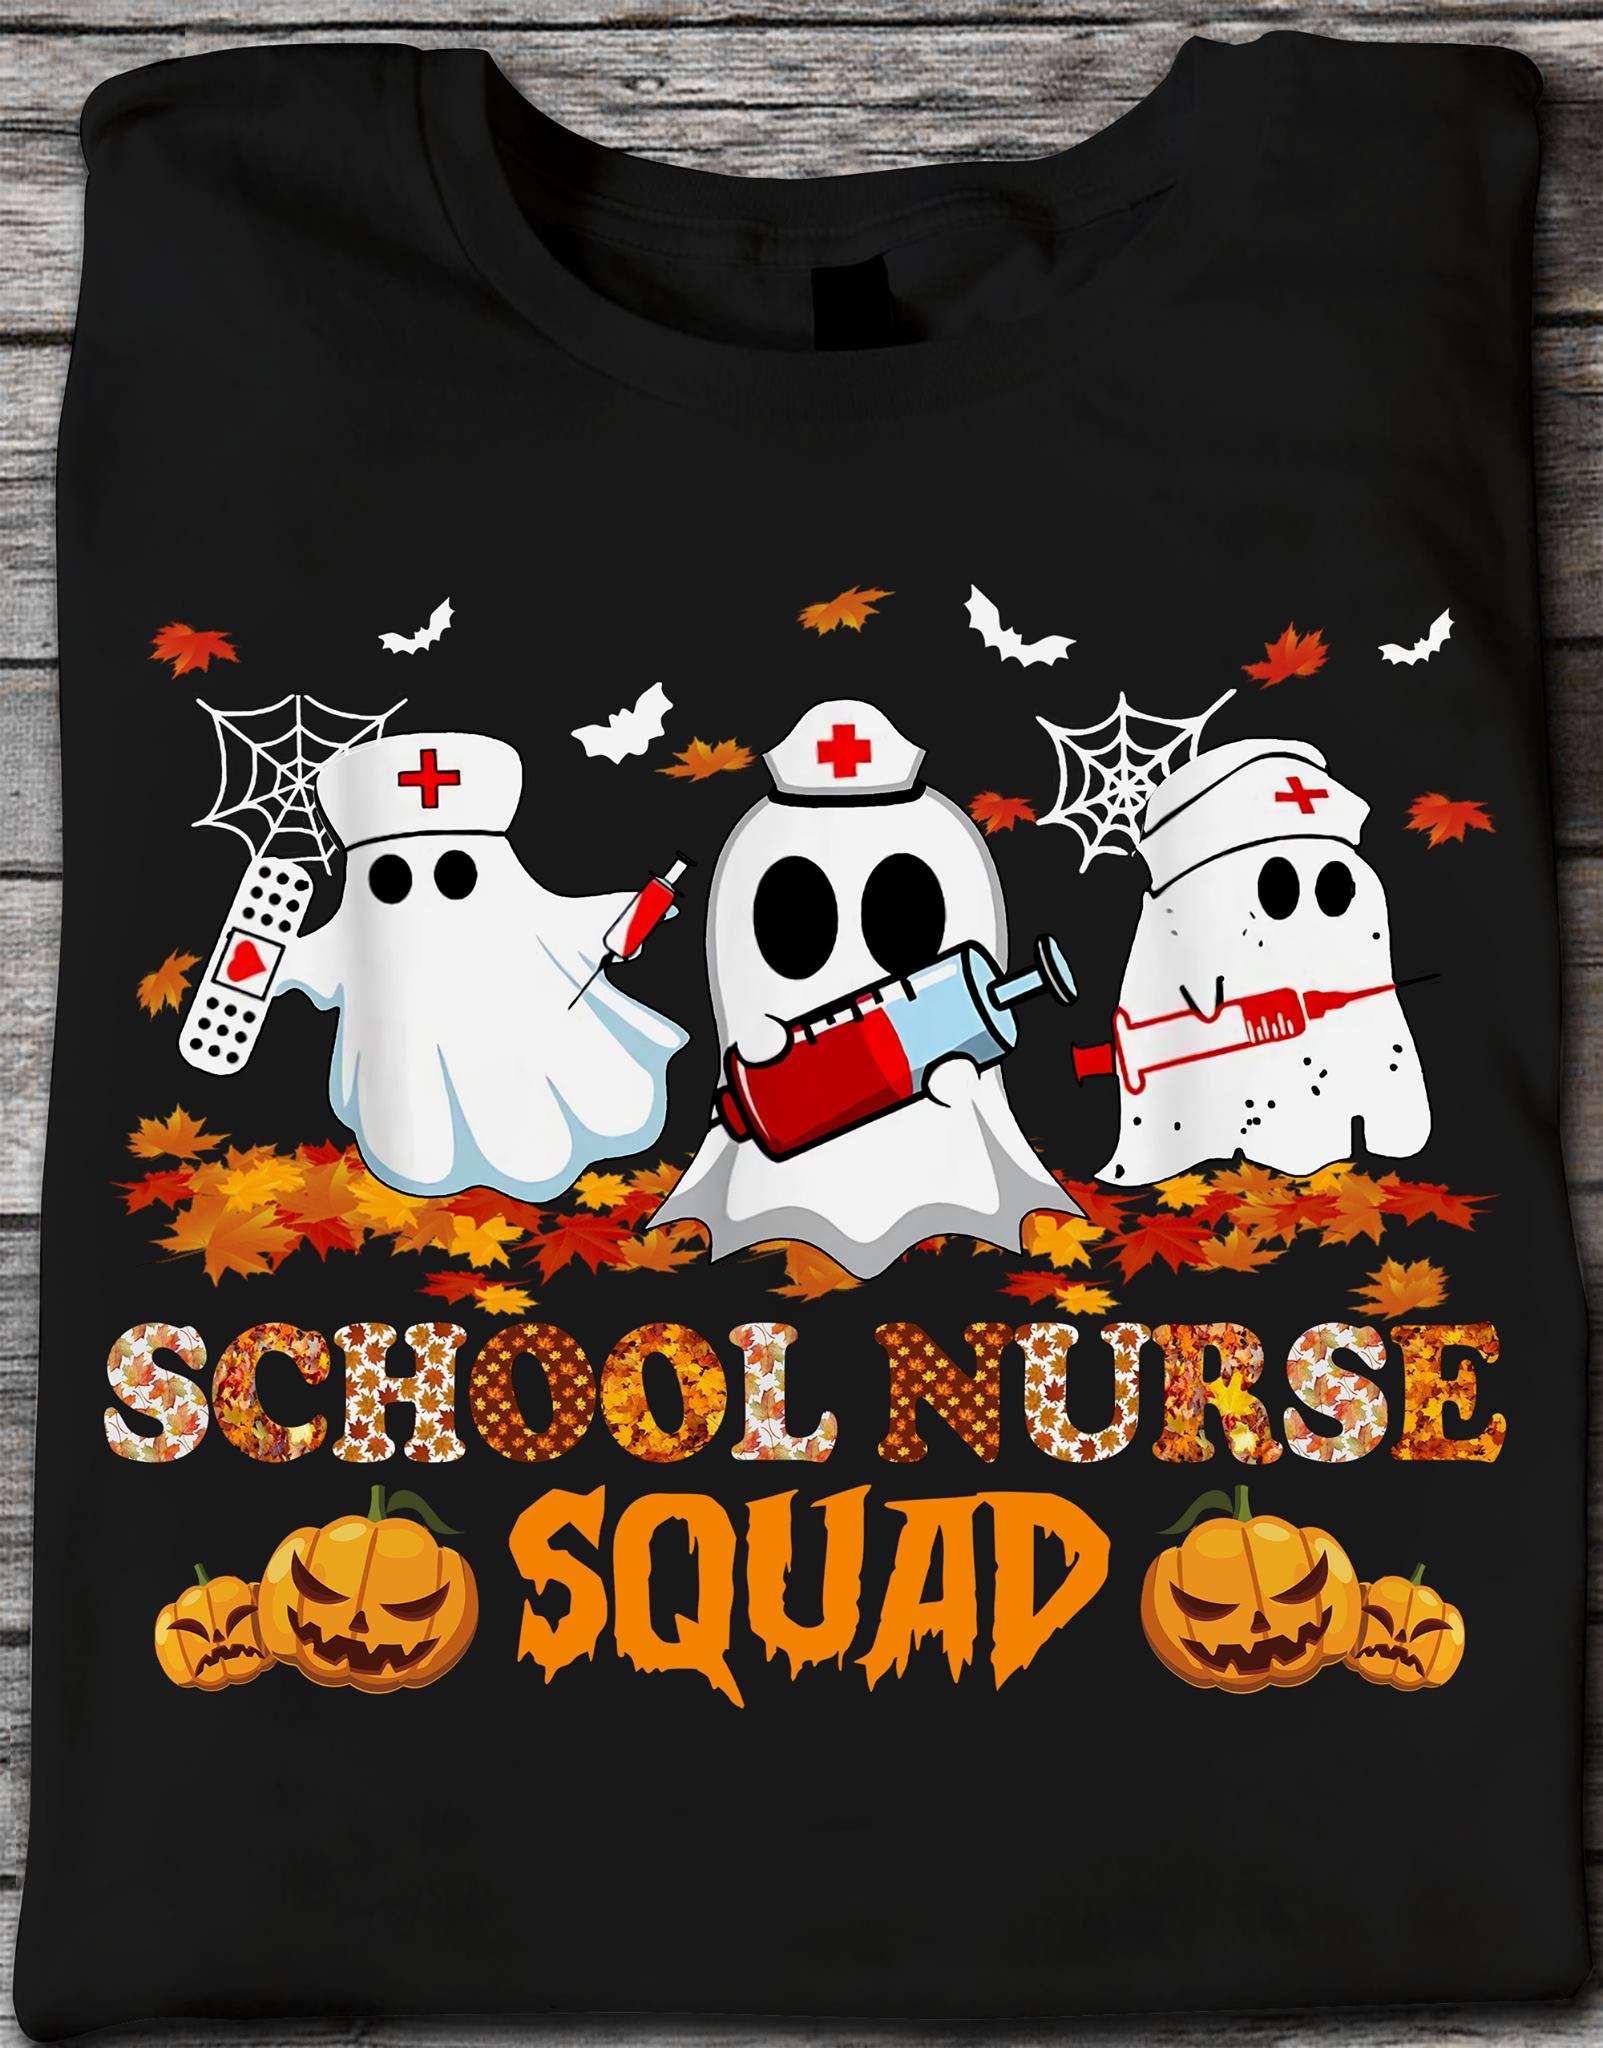 School nurse squad - White ghost nurse, Halloween costume for nurse